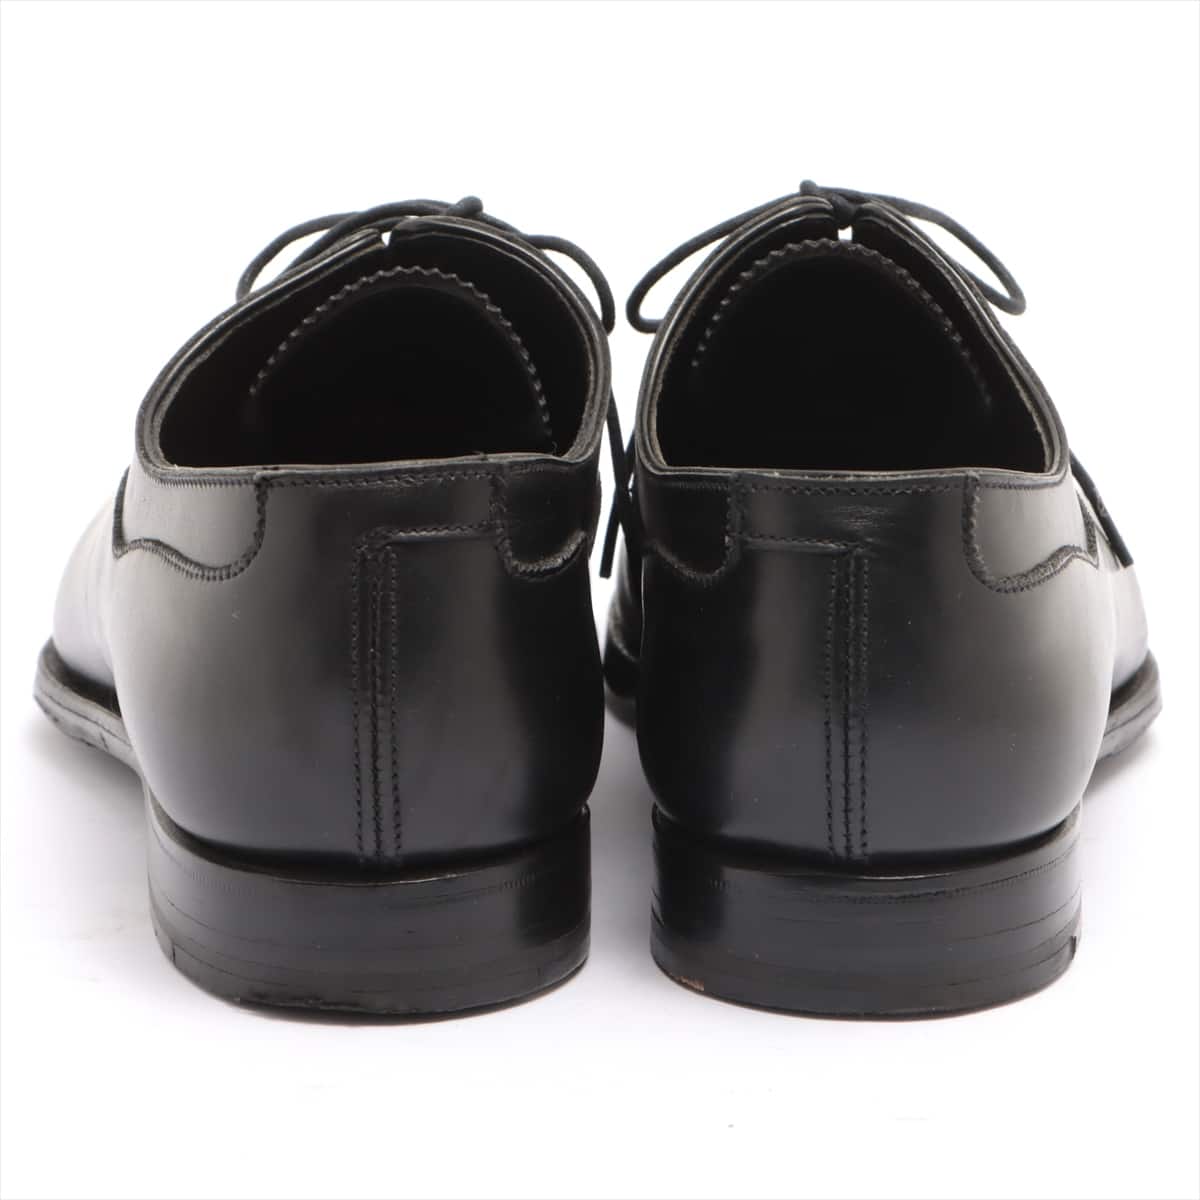 Crockett & Jones Leather Leather shoes 6E Men's Black medallions 6276